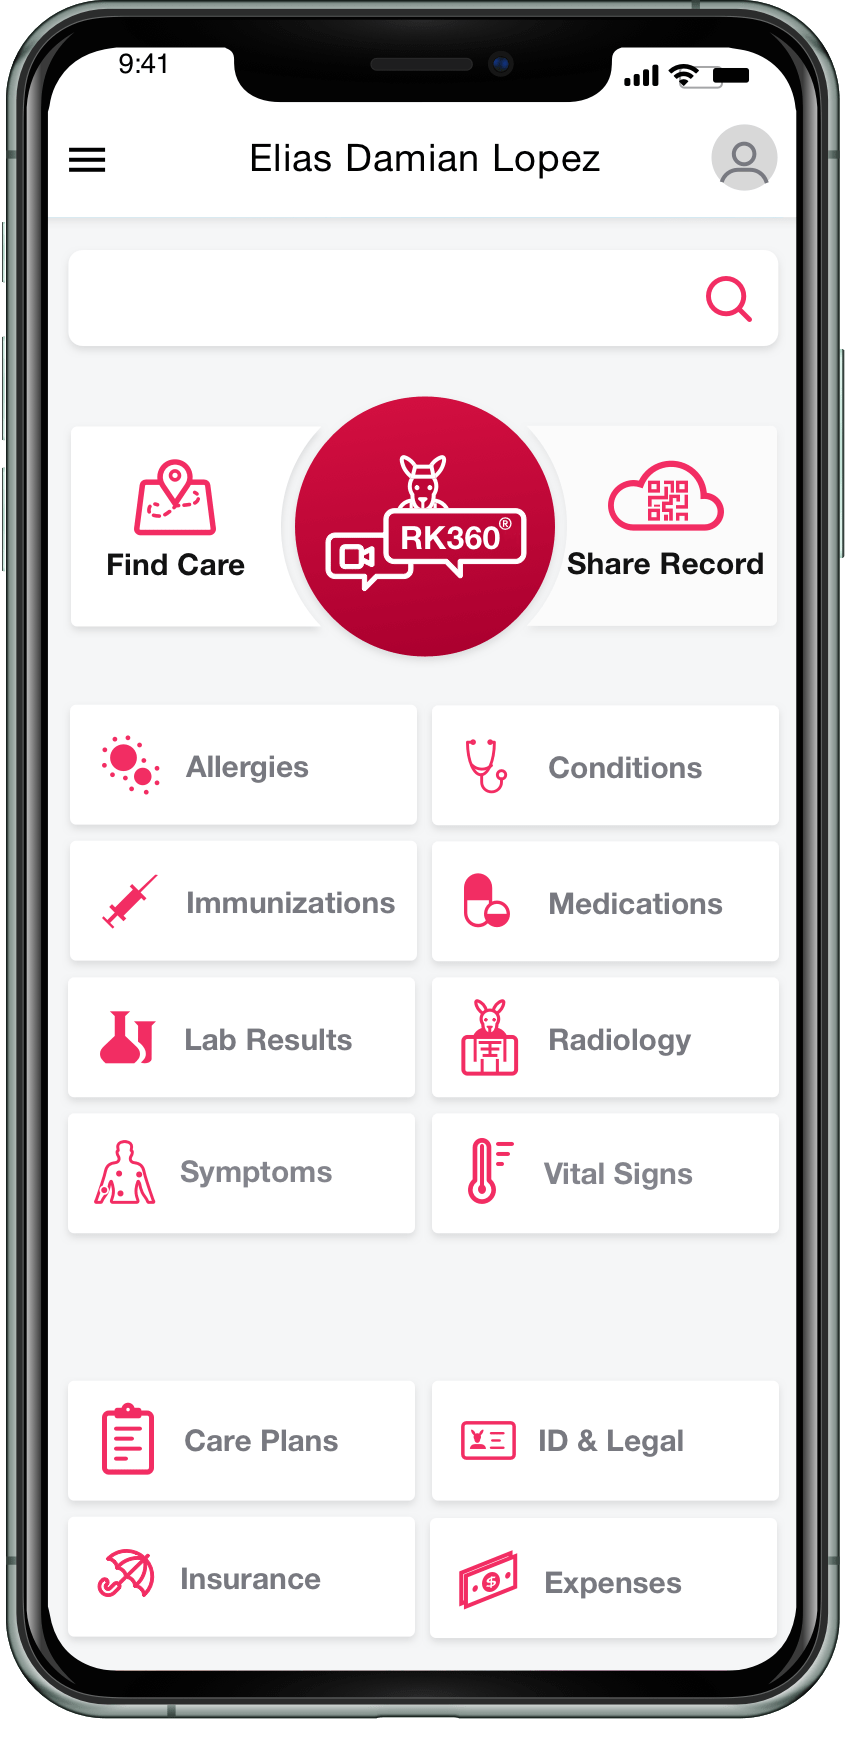 Dashboard of health data sharing app